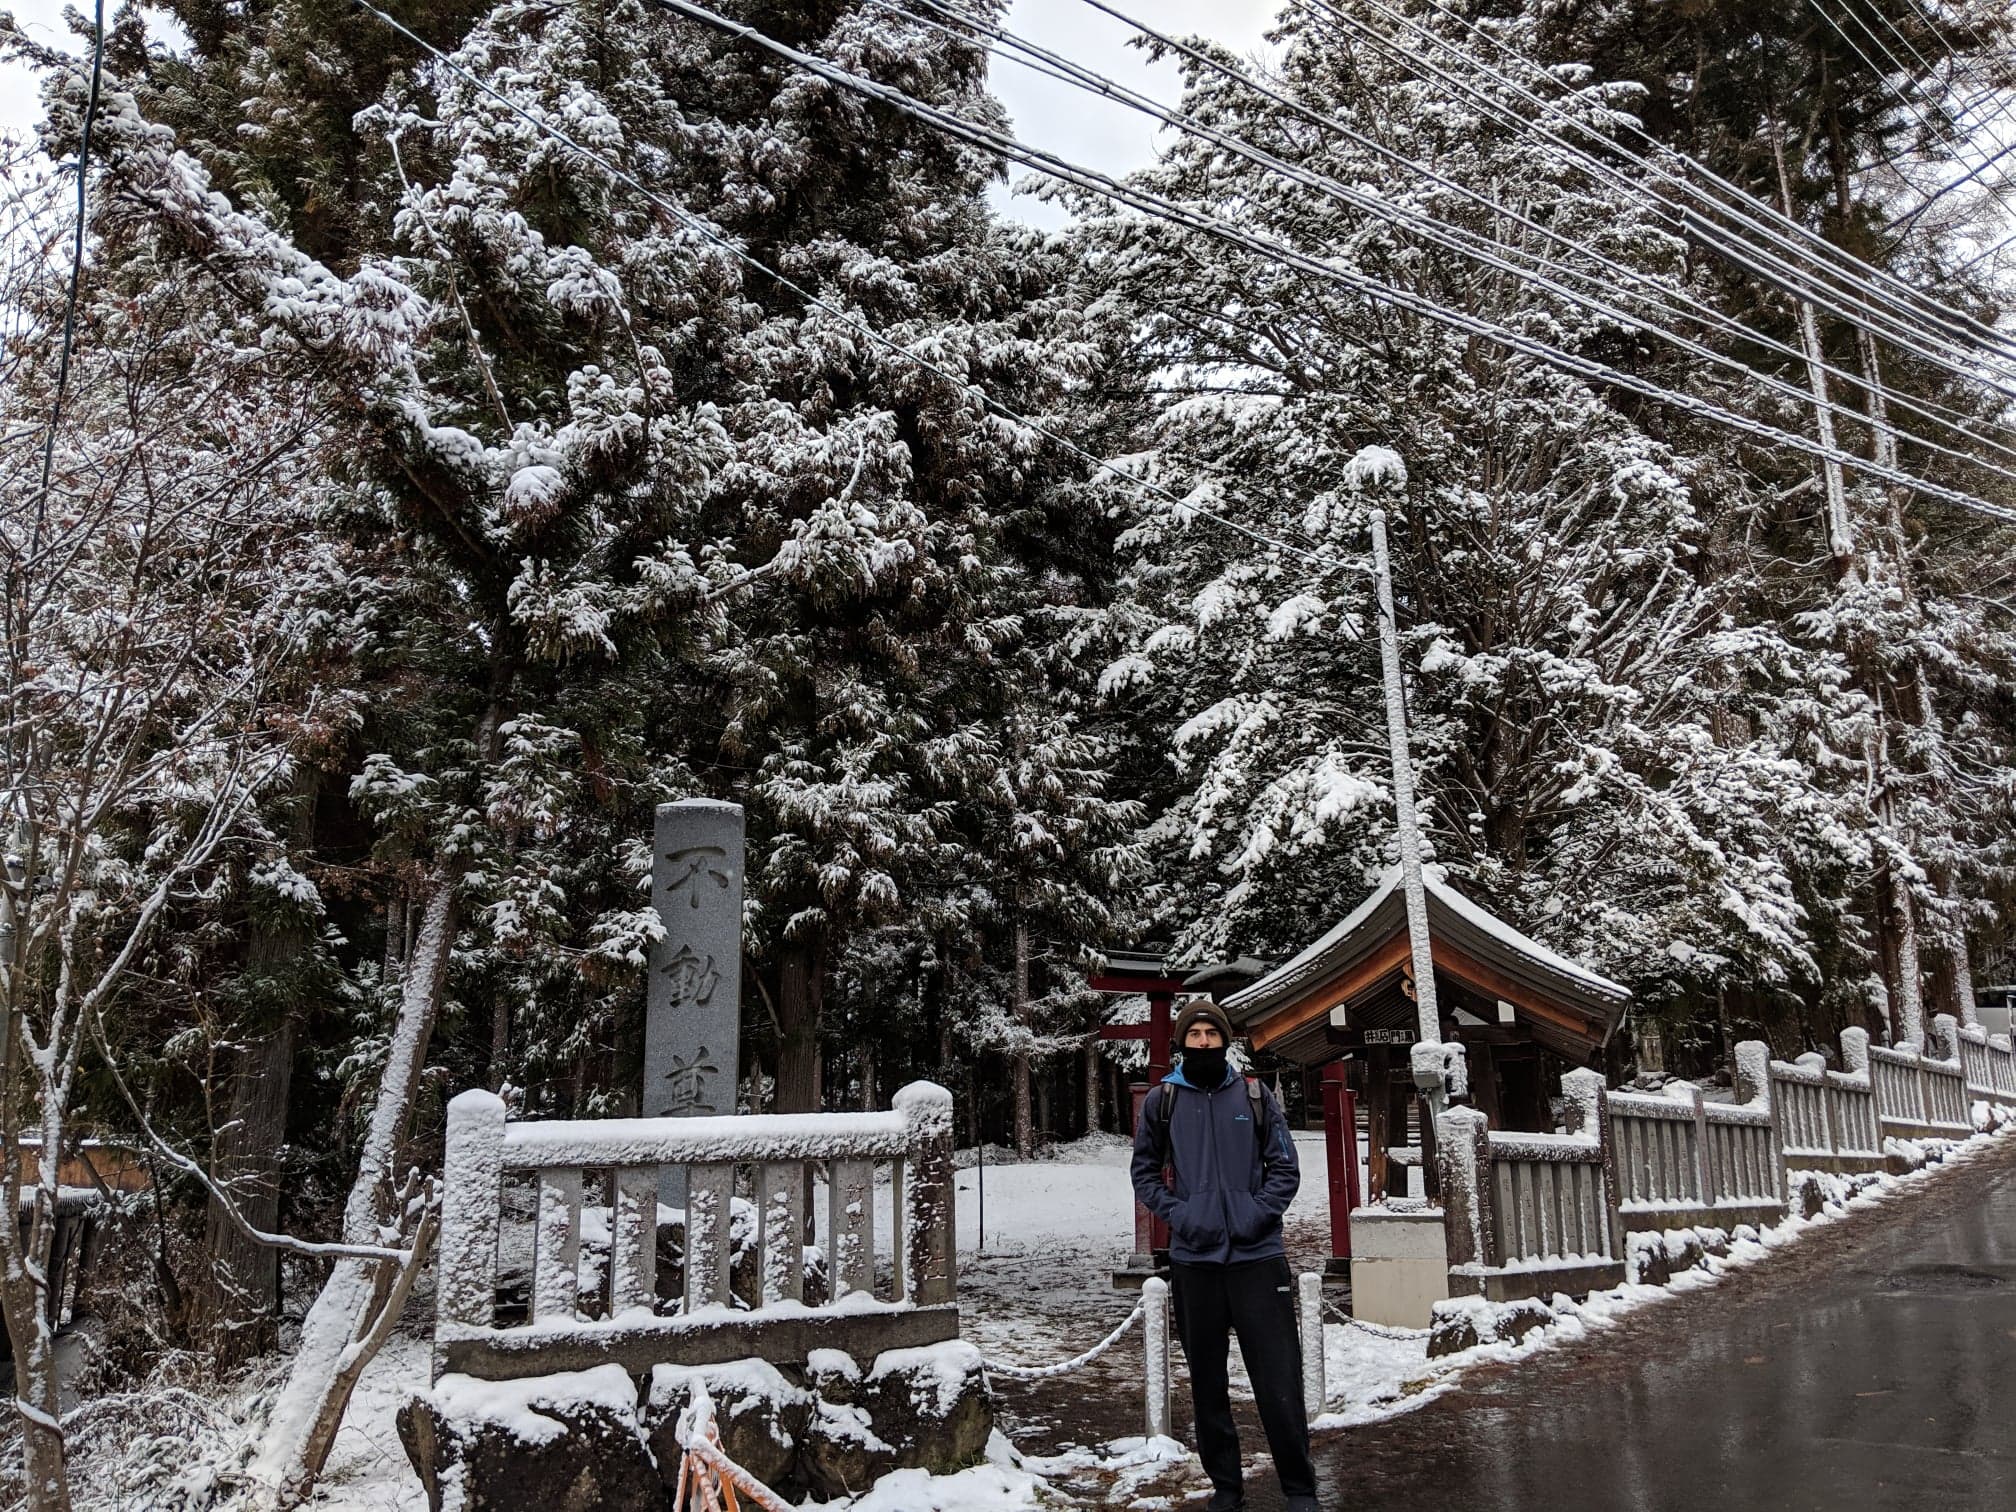 Nagano is Japan’s winter wonderland